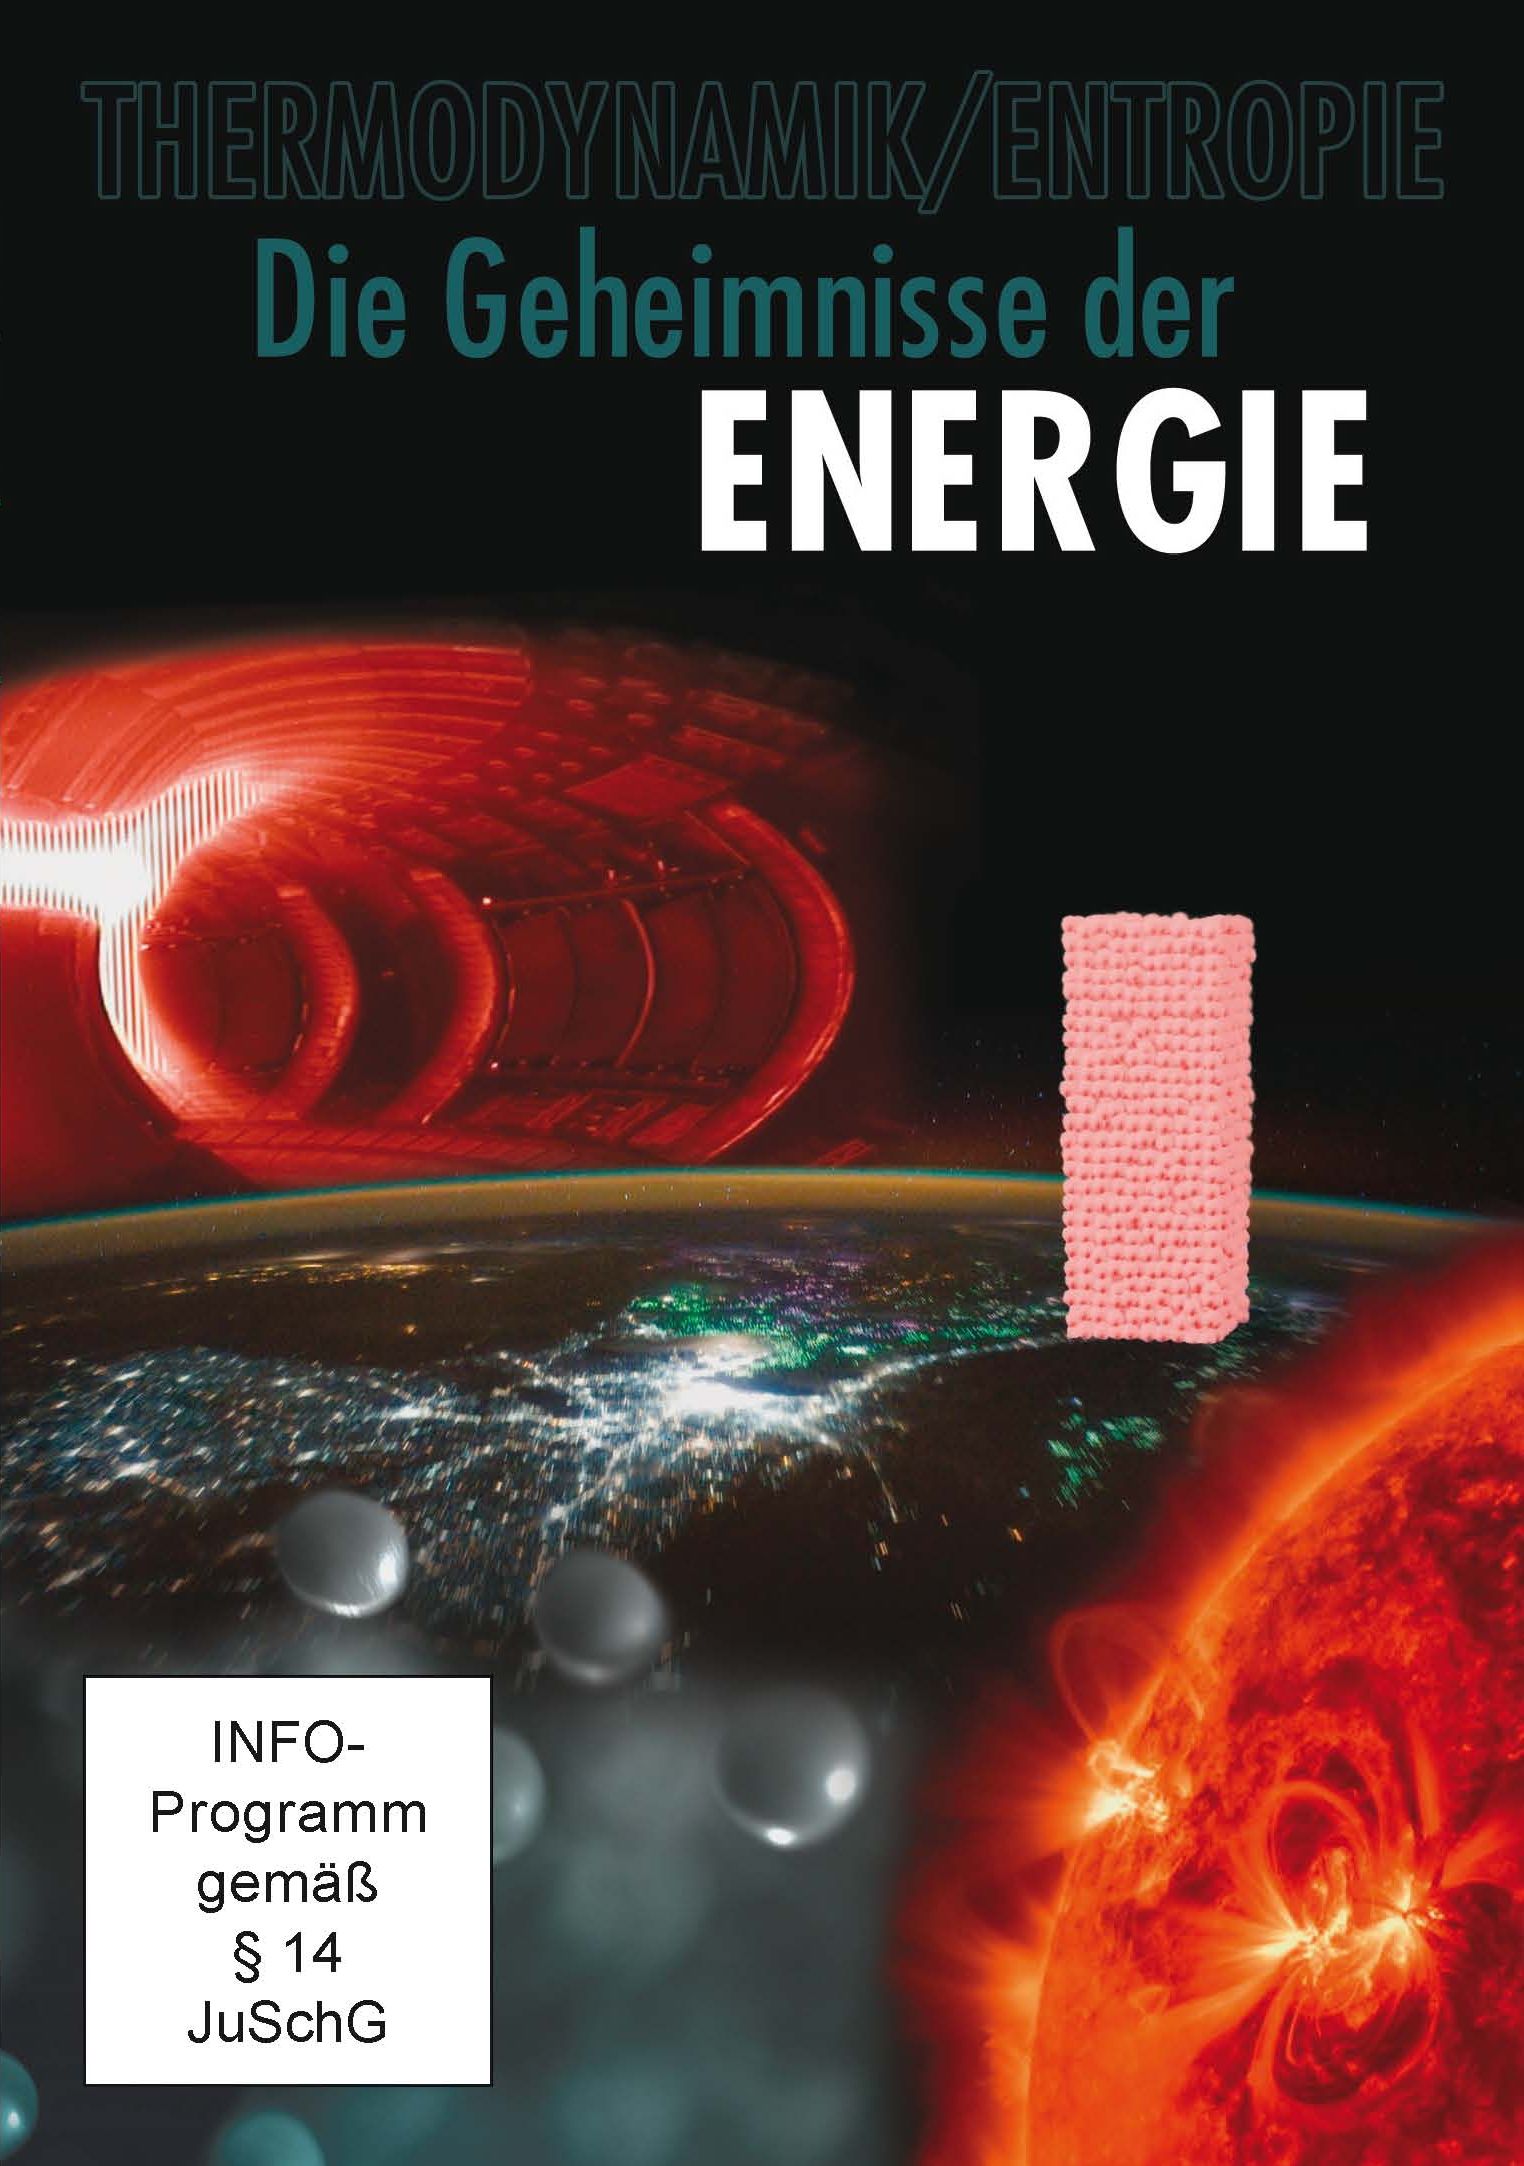 Die Geheimnisse der Energie [DVD]